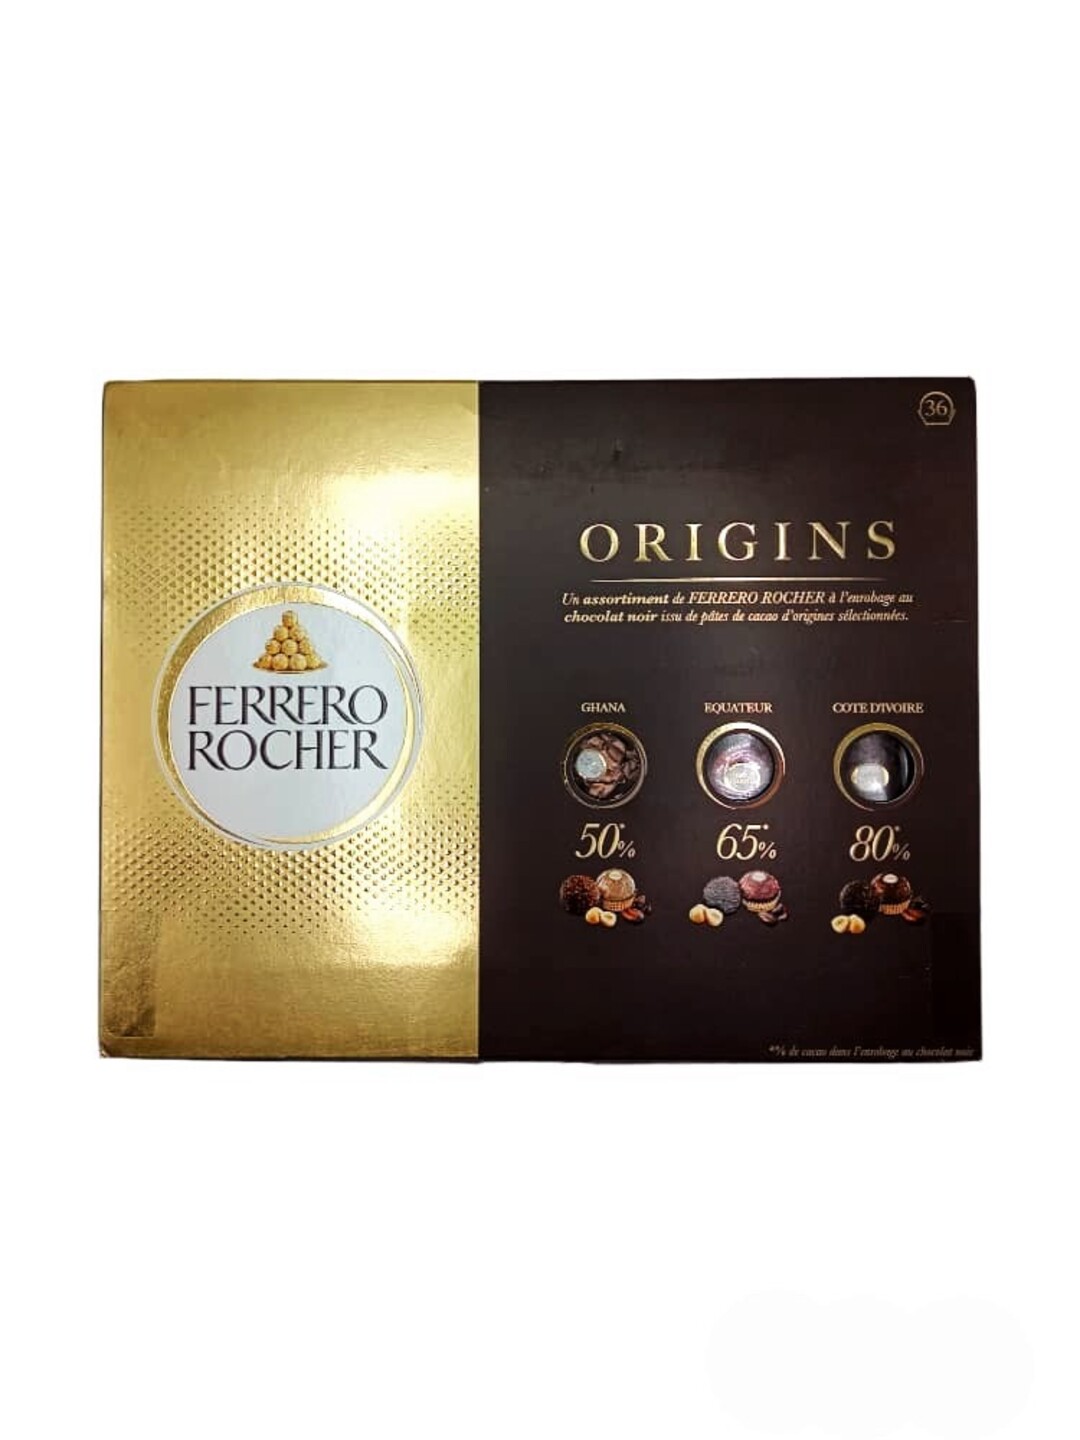 Ferrero Rocher Origins, le 1er assortiment Ferrero Rocher au